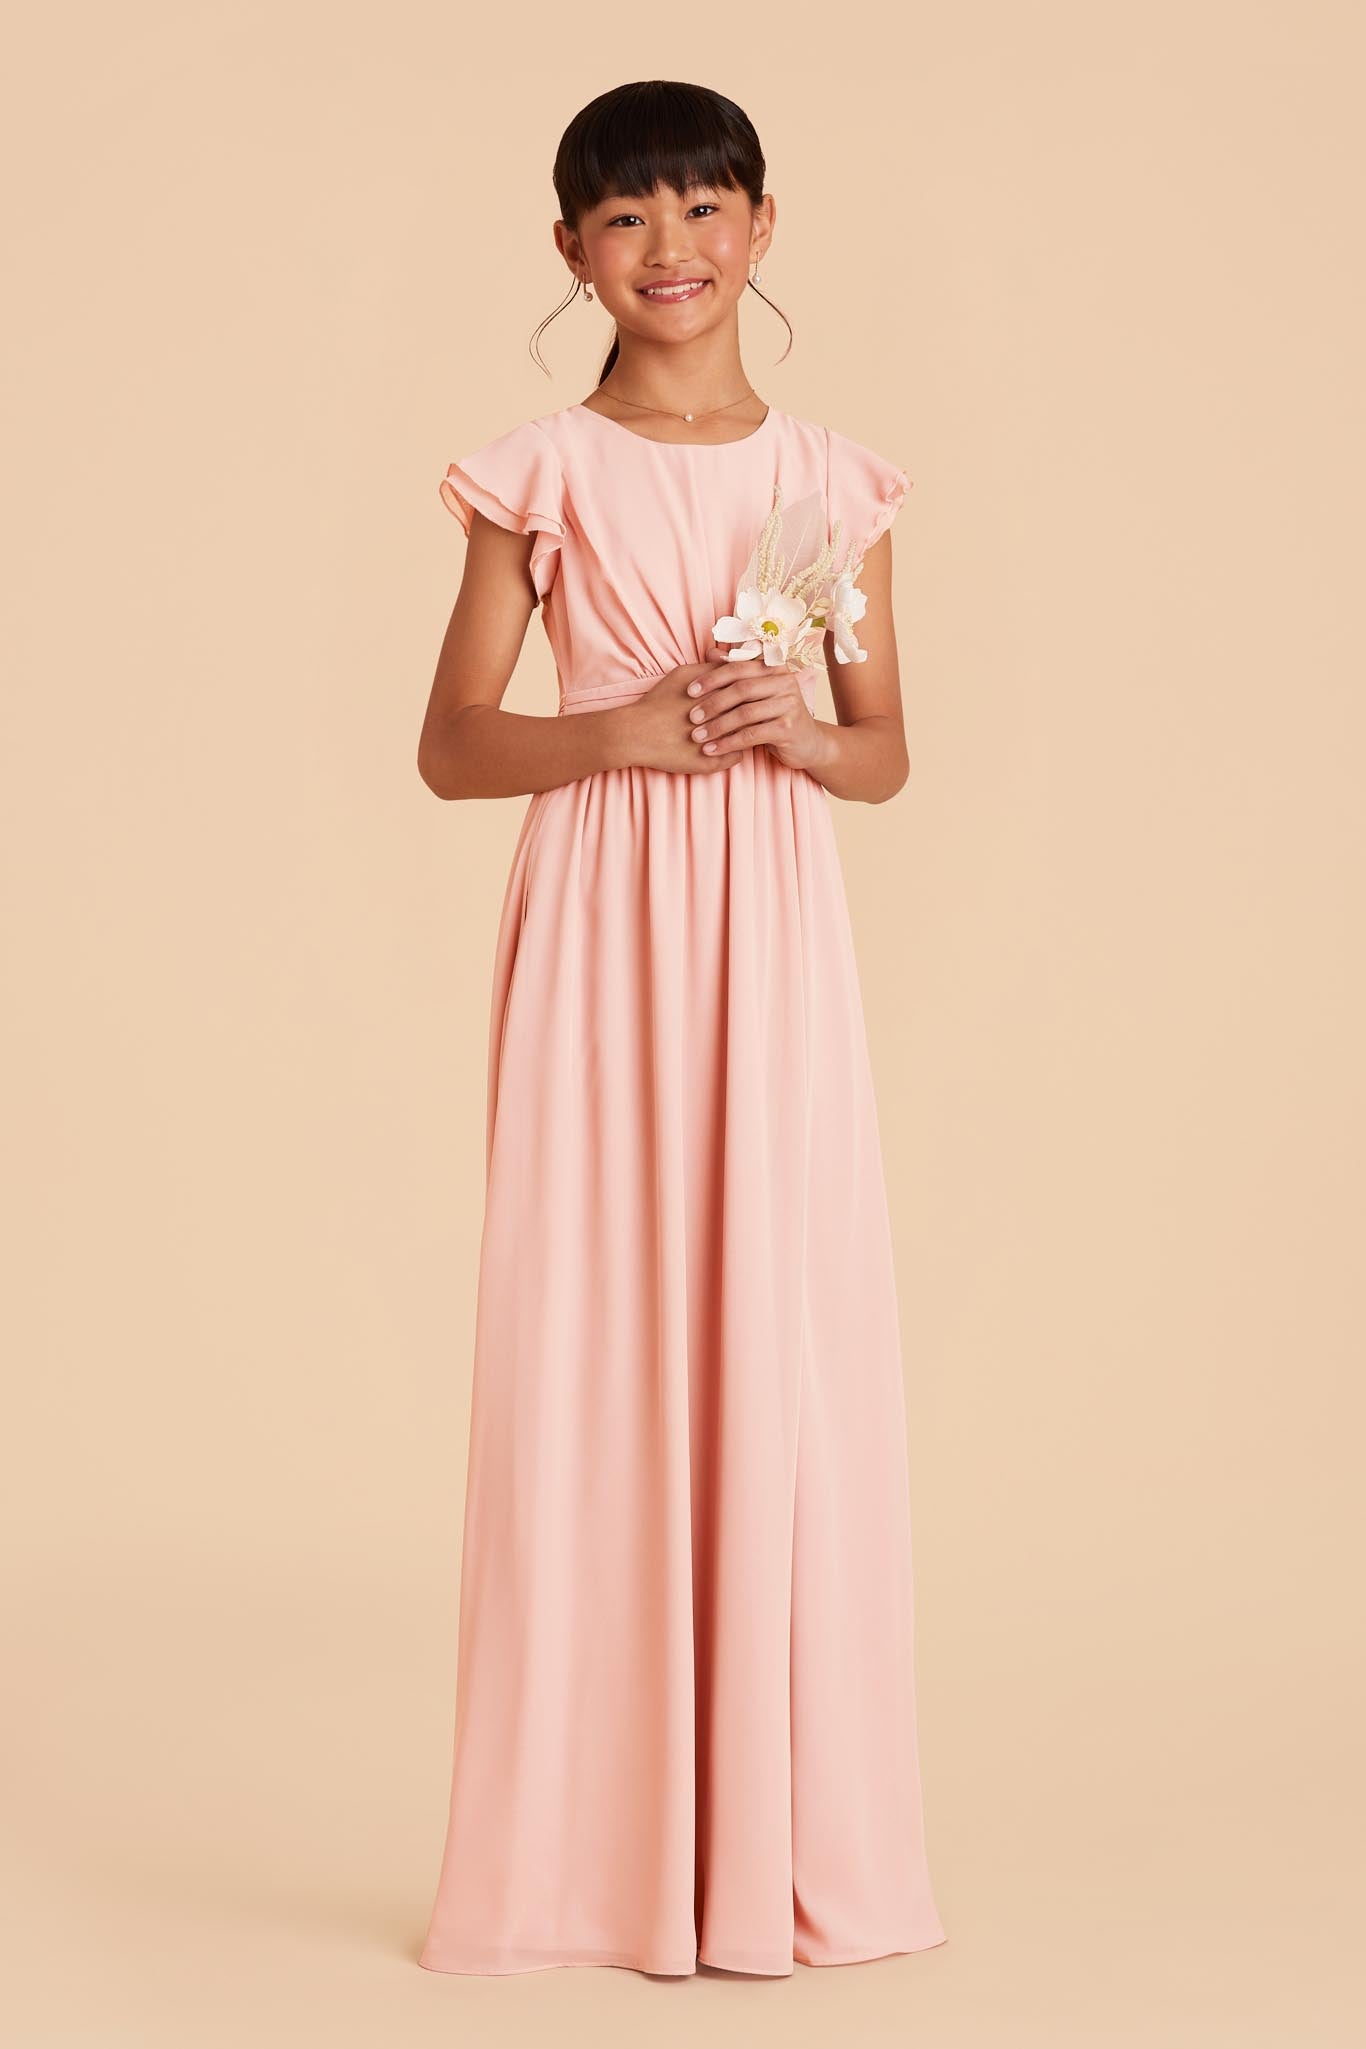 Blush Pink Celine Junior Dress by Birdy Grey